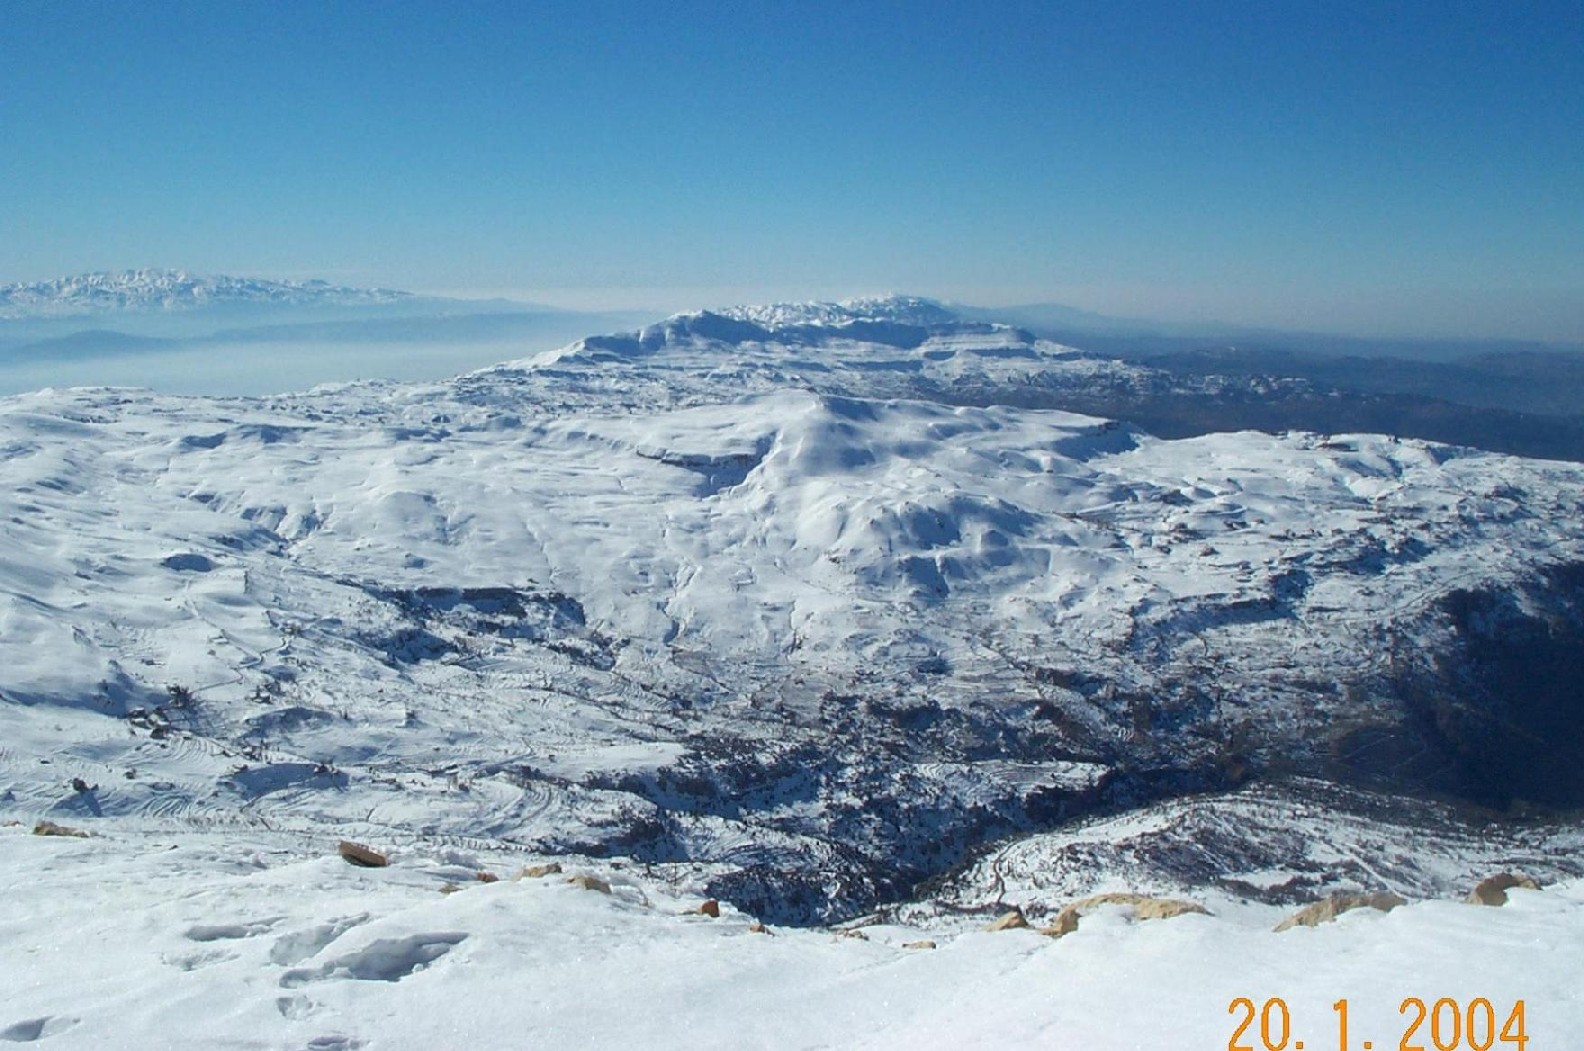 View from top of Faraya resort, Lebanon, Mzaar Ski Resort